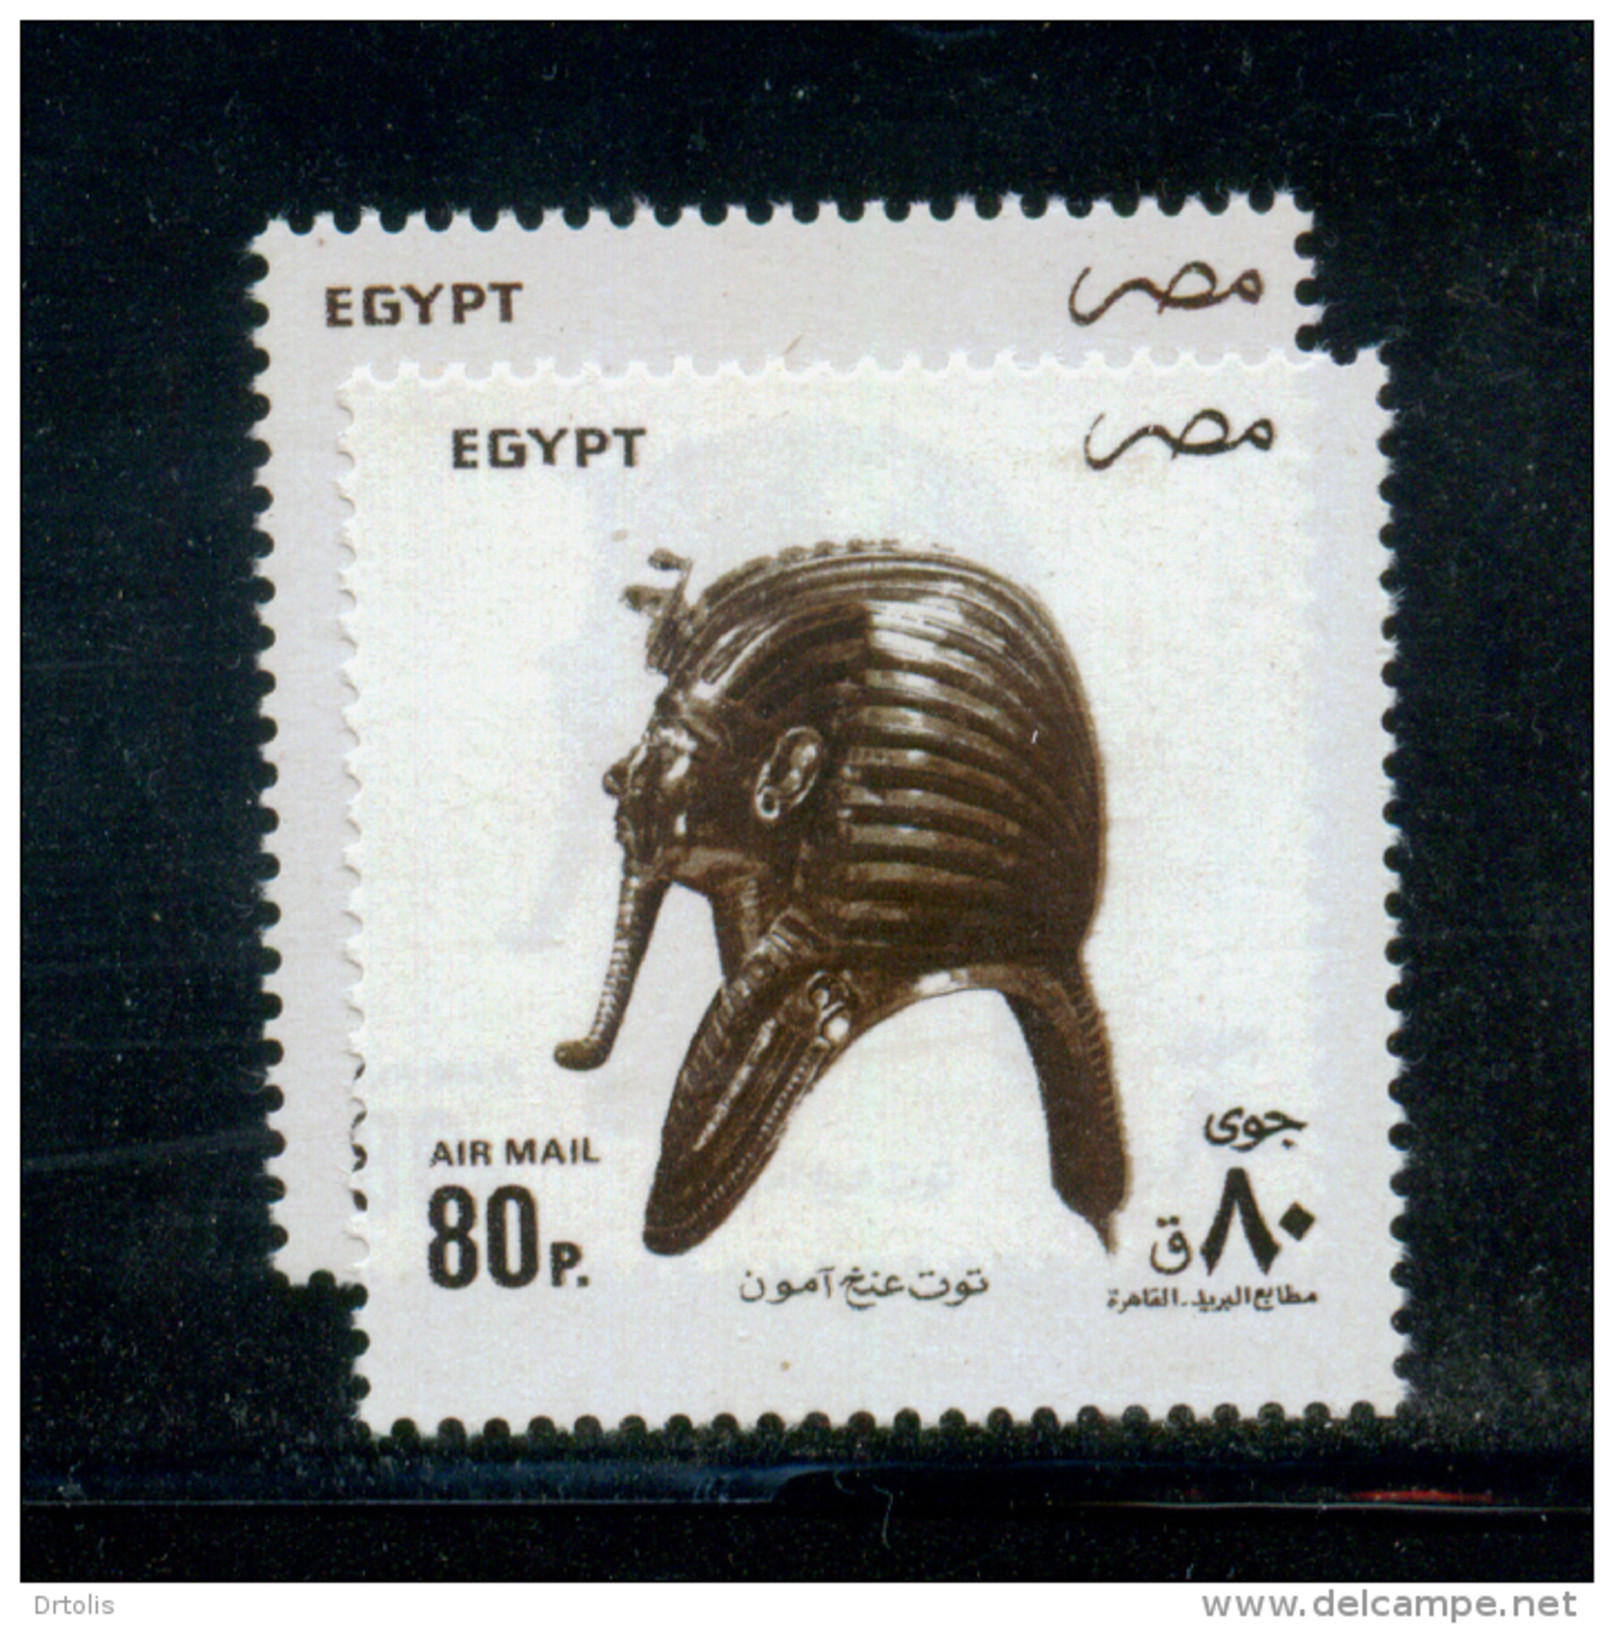 EGYPT / 1993 / AIRMAIL / 80P. TYPE 1 & II / EGYPTOLOGY / ARCHEOLOGY / EGYPT ANTIQUITY / MNH / VF - Nuevos